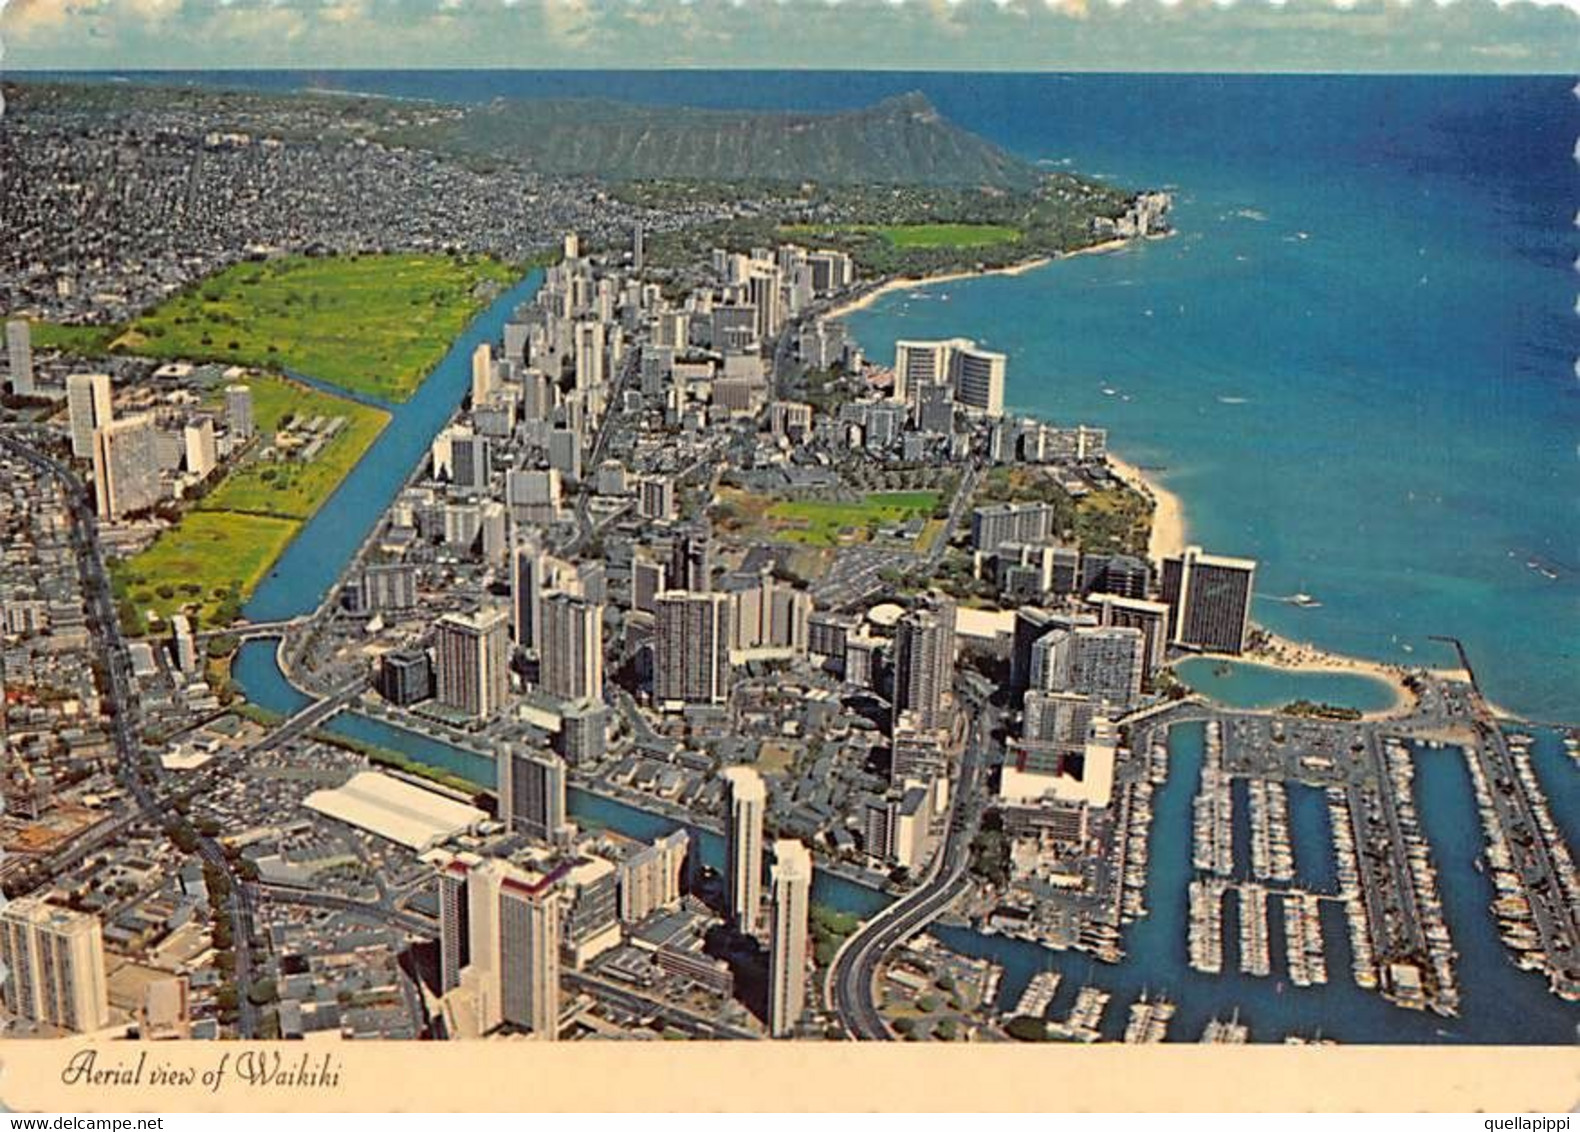 014437 "HAWAII - HONOLULU - WAIKIKI BEACH AND DIAMOND HEAD"  VEDUTA. CART NON SPED - Honolulu